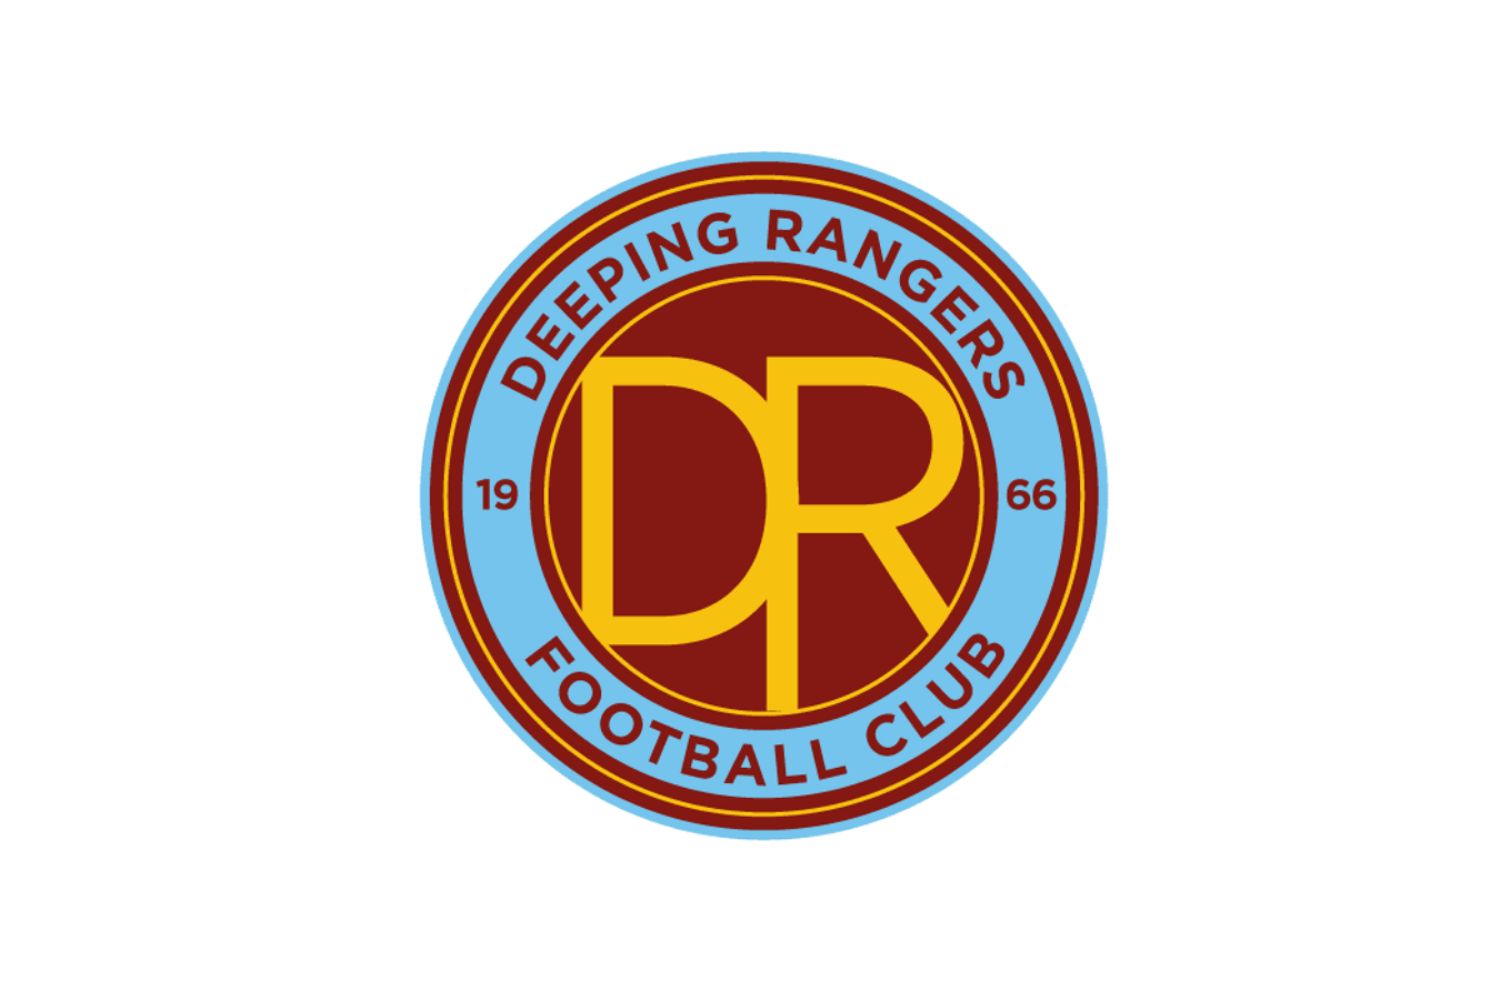 deeping-rangers-fc-22-football-club-facts